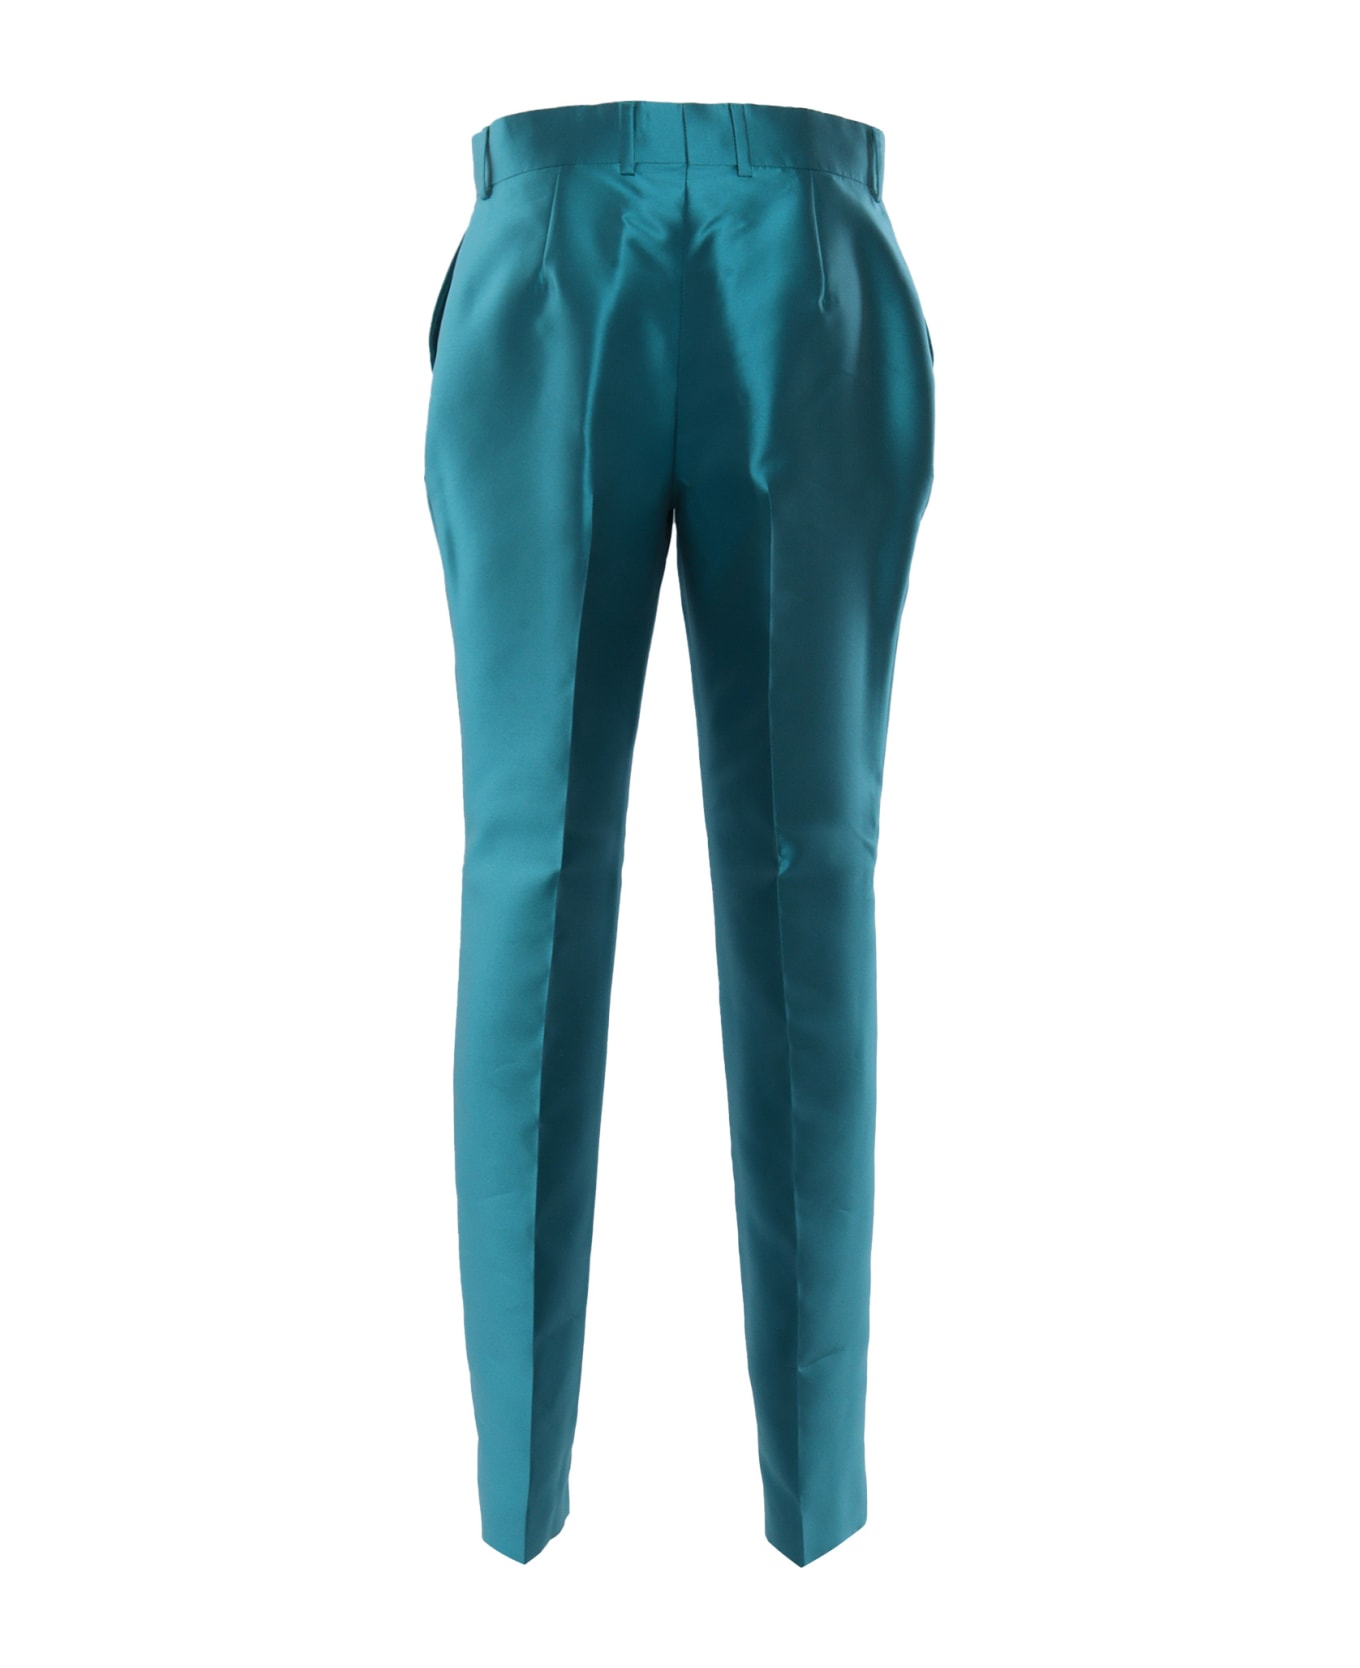 Alberta Ferretti Turquoise Trousers - LIGHT BLUE